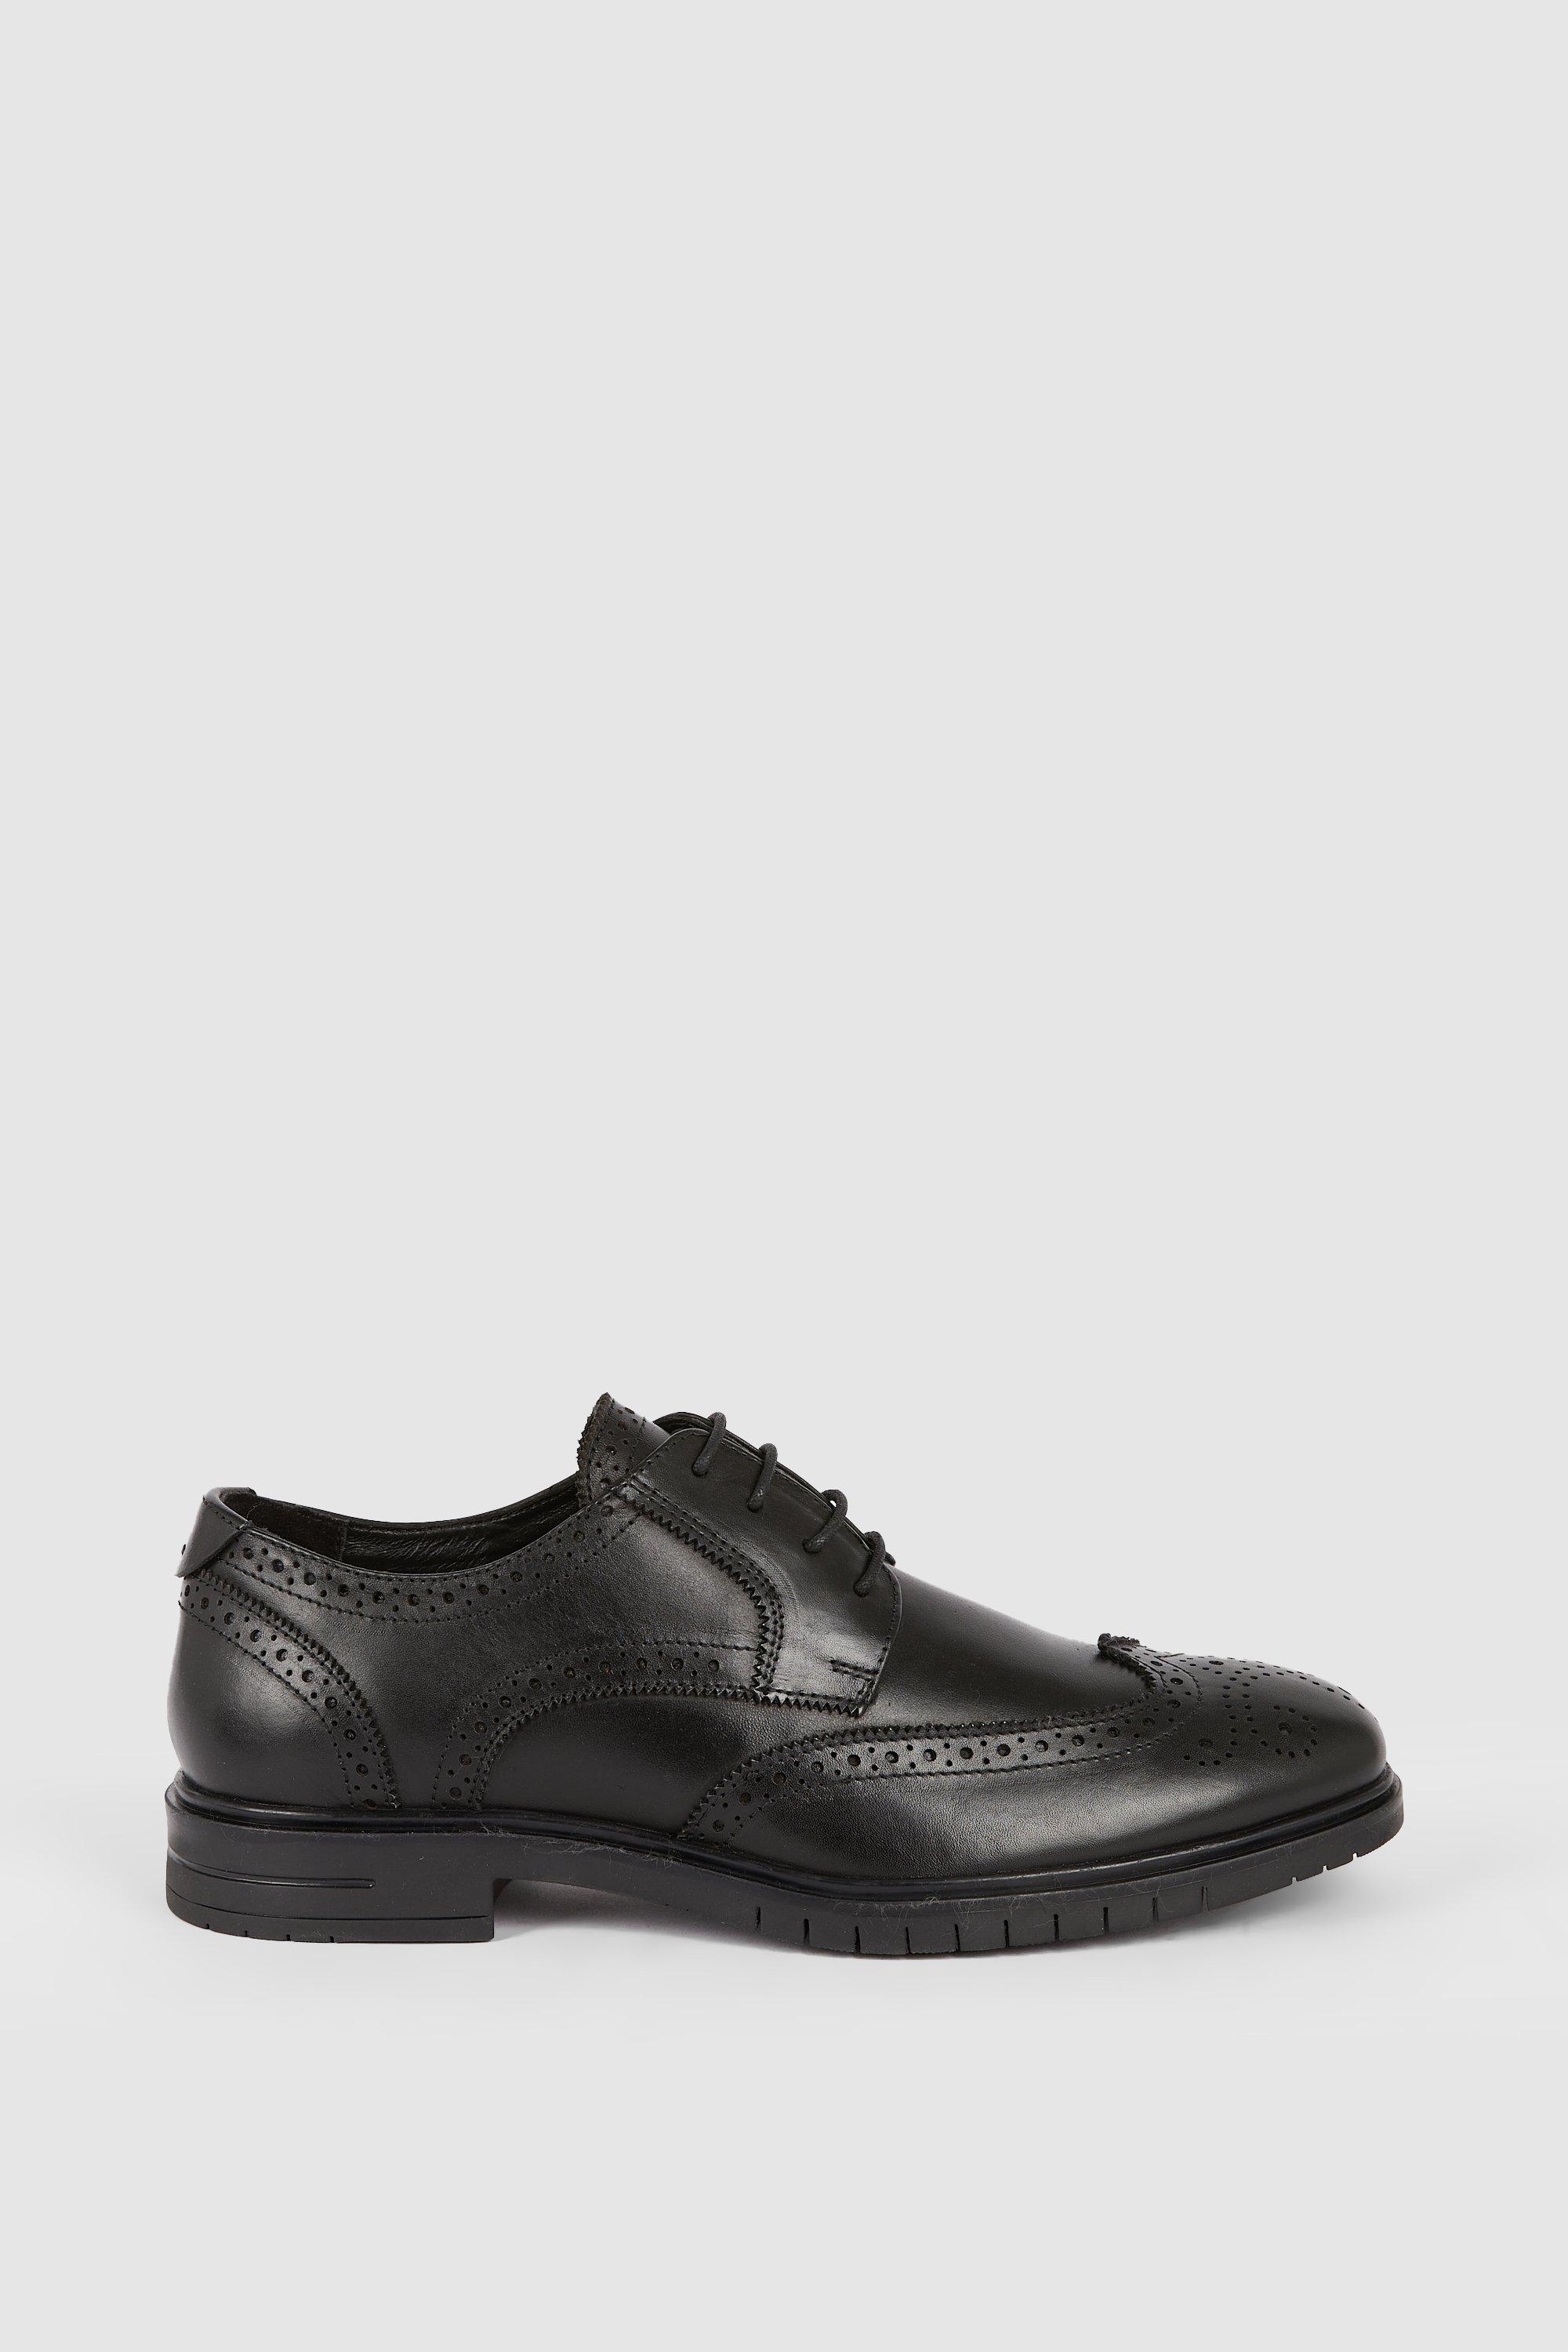  Debenhams Mens Leather Airsoft Shoes, Black, 13